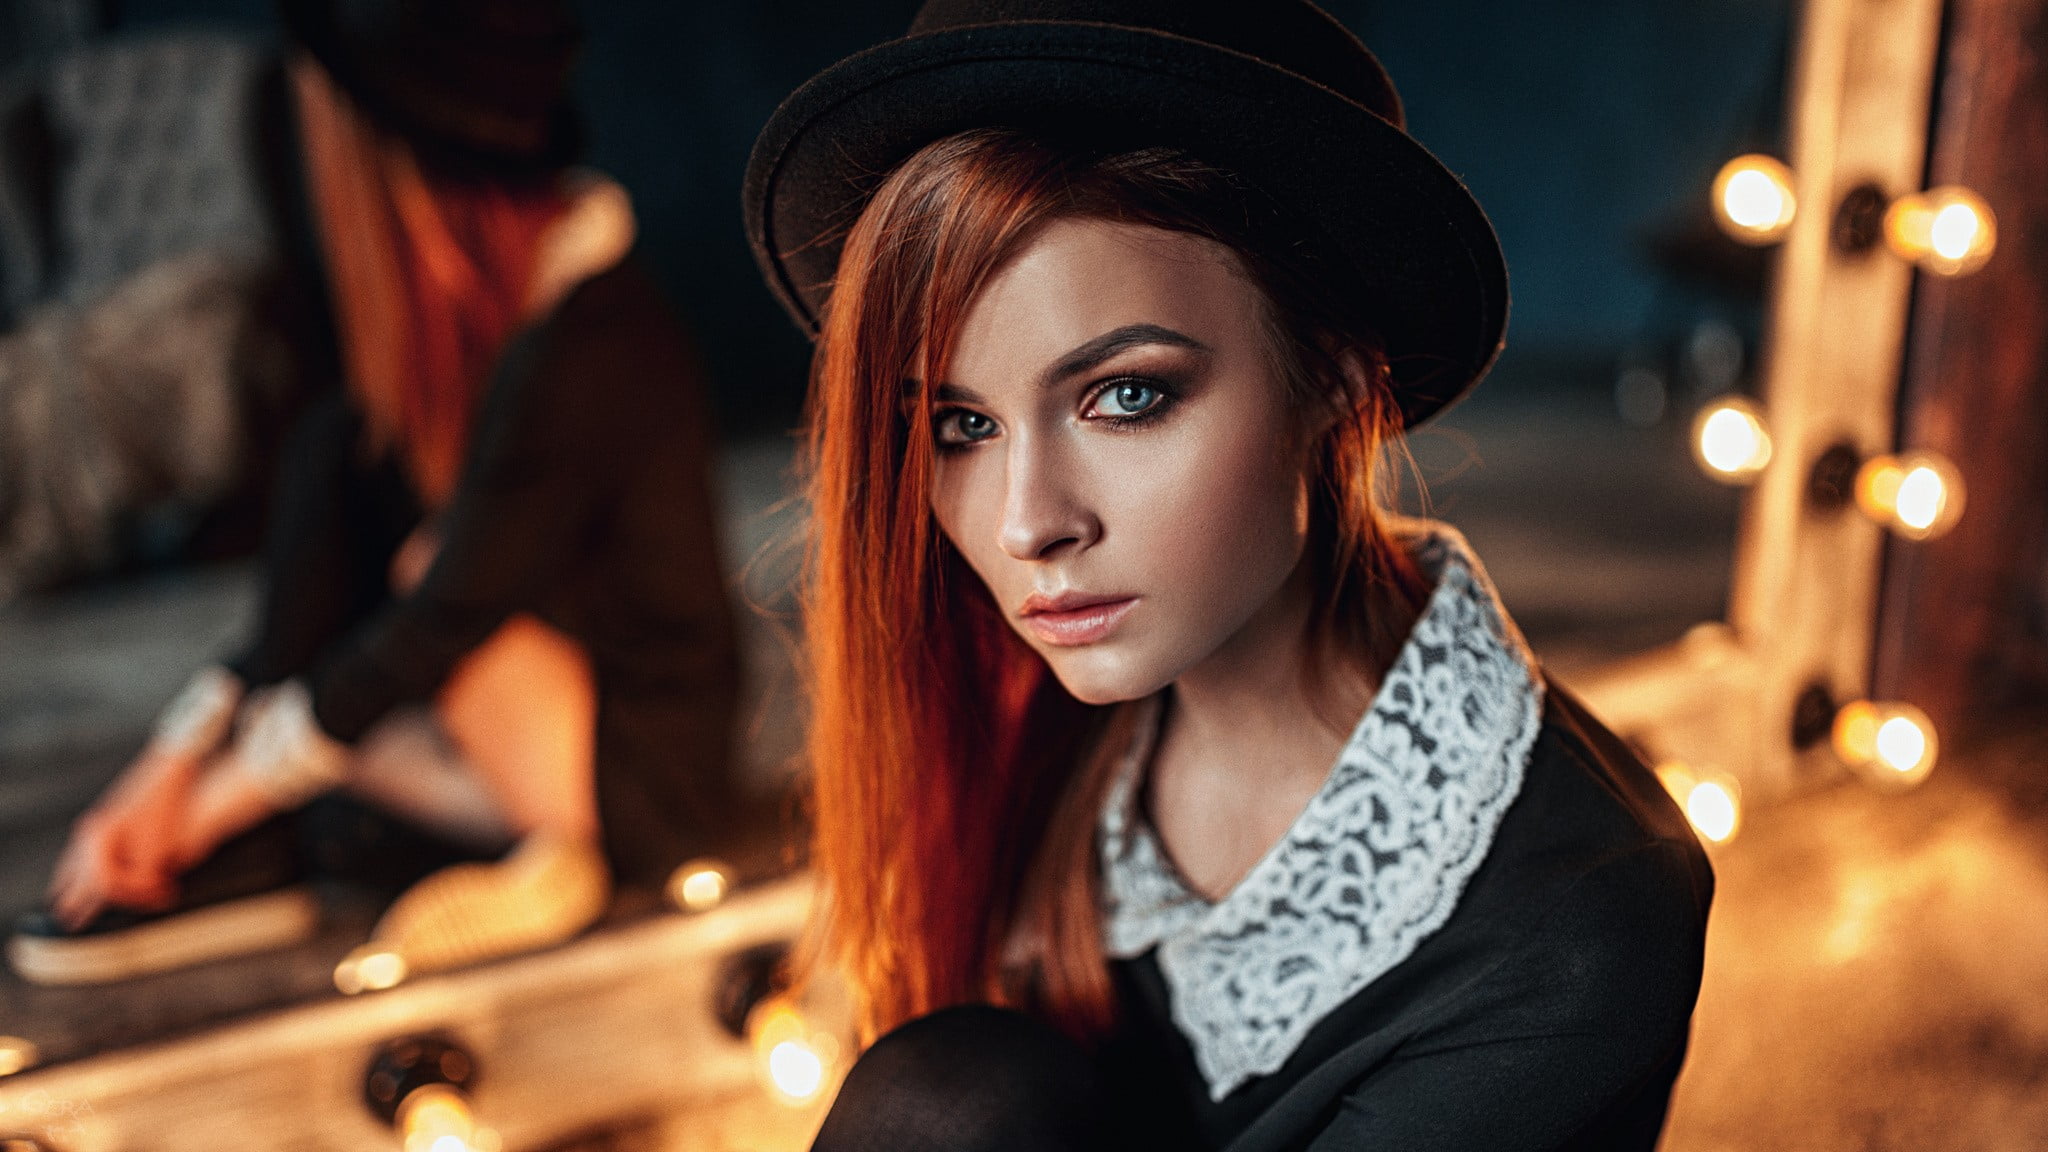 women, redhead, blue eyes, face, portrait, hat, black clothing